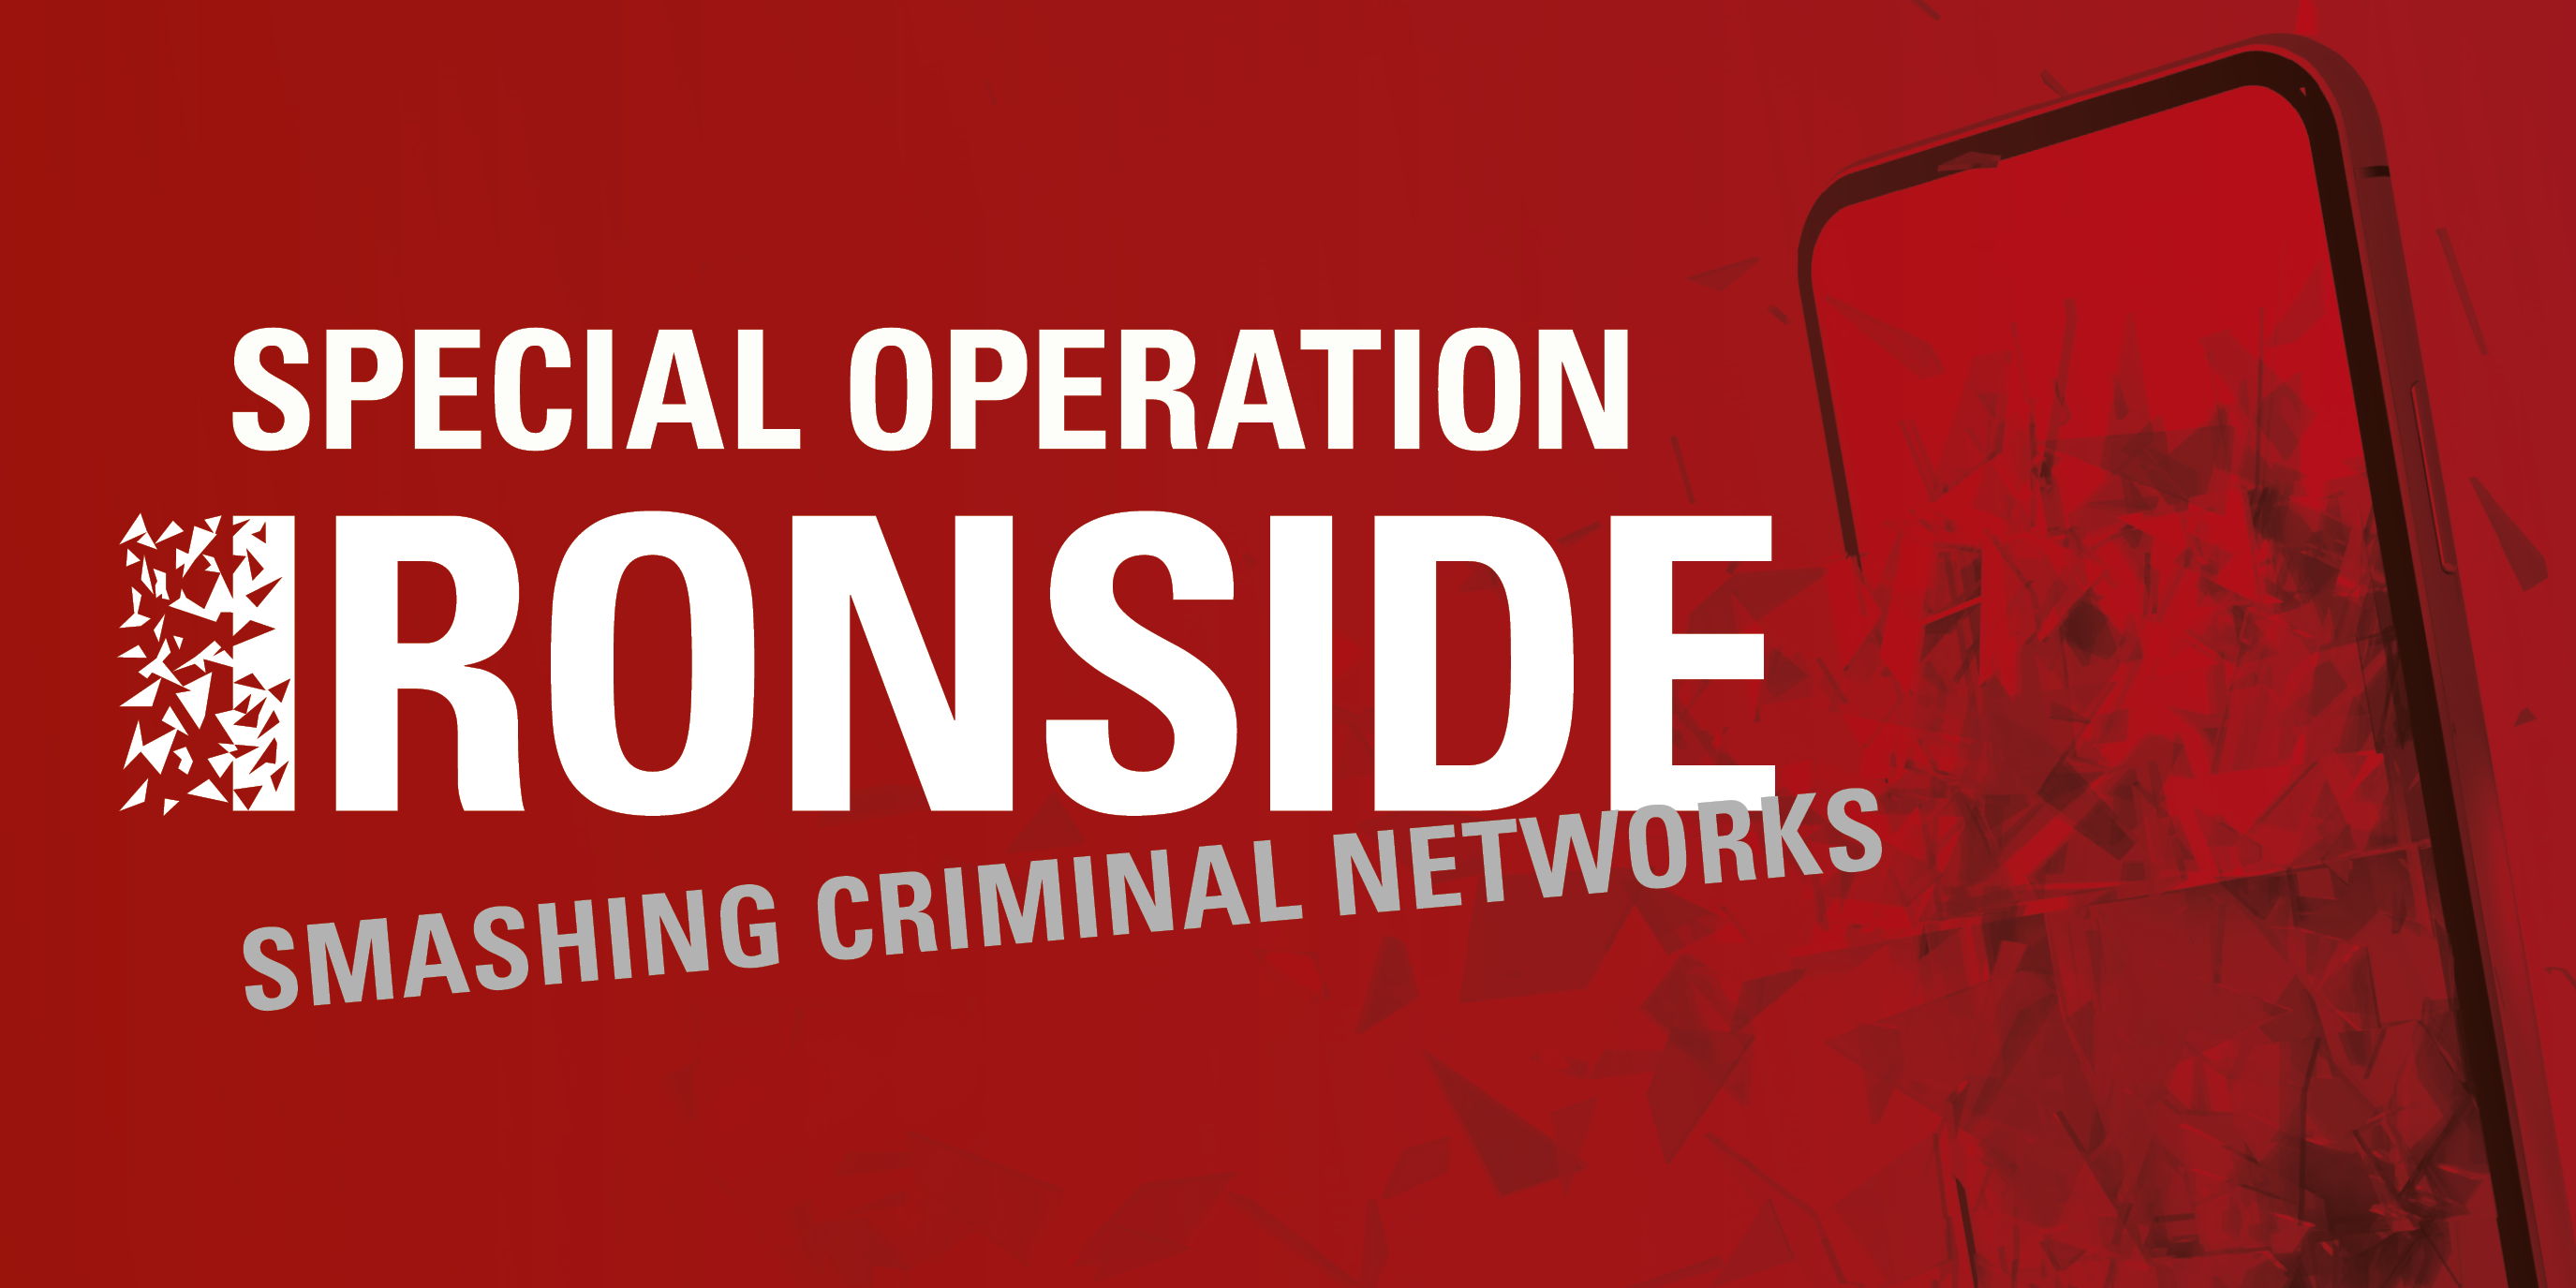 Special Operation Ironside - smashing criminal networks